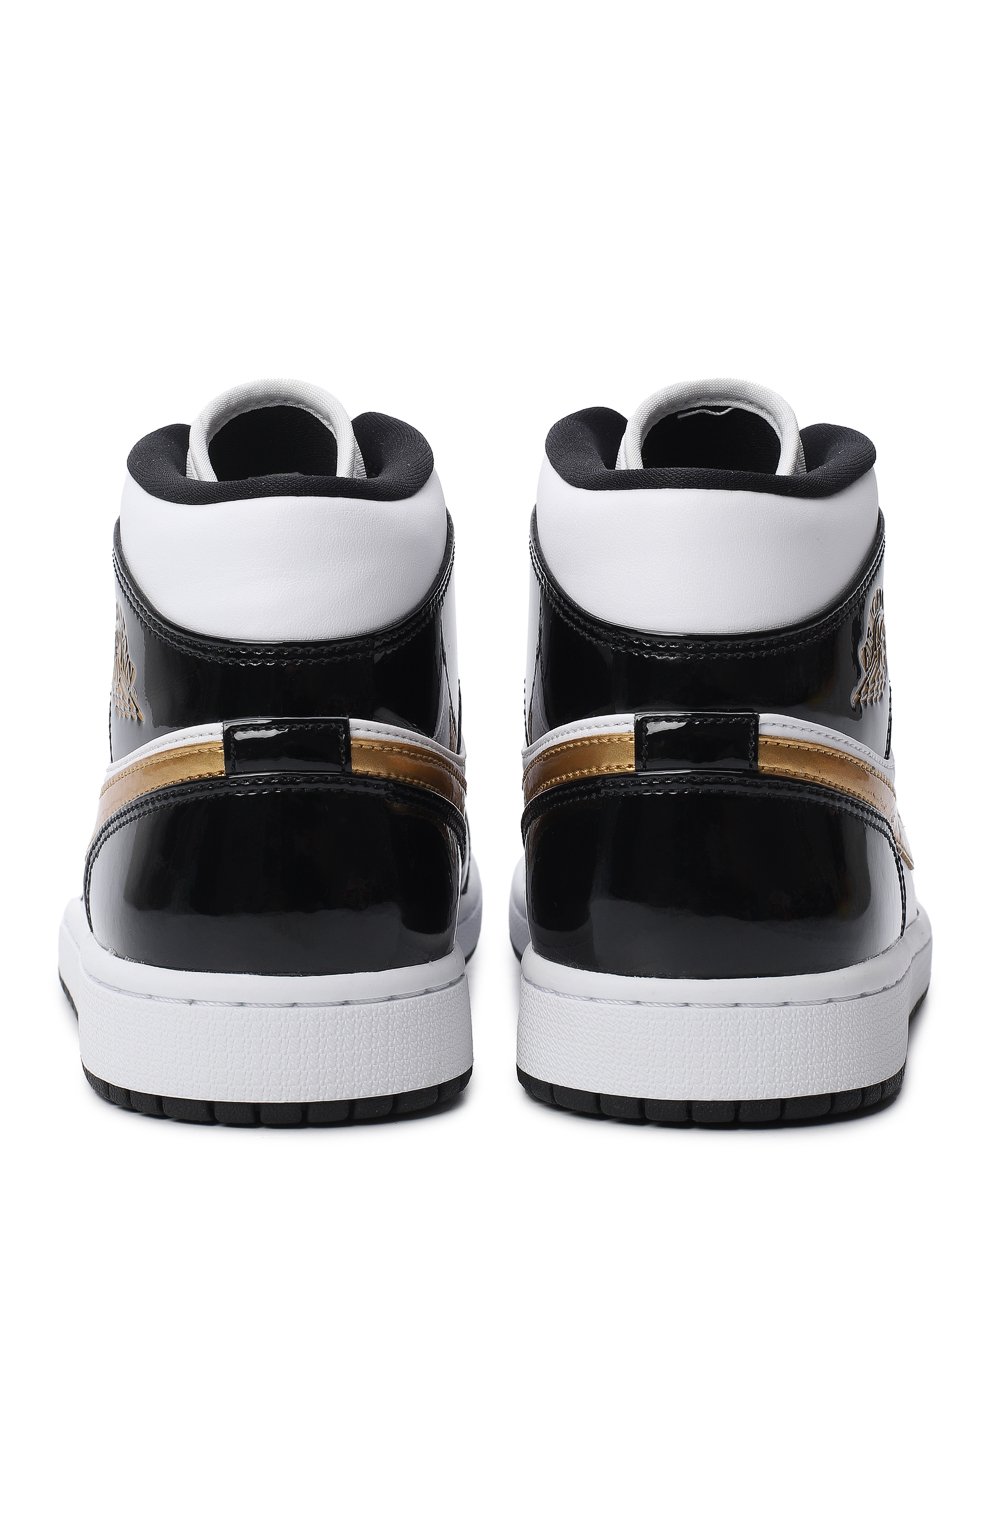 Кеды Air Jordan 1 Mid Patent Black White Gold | Nike | Чёрно-белый - 3